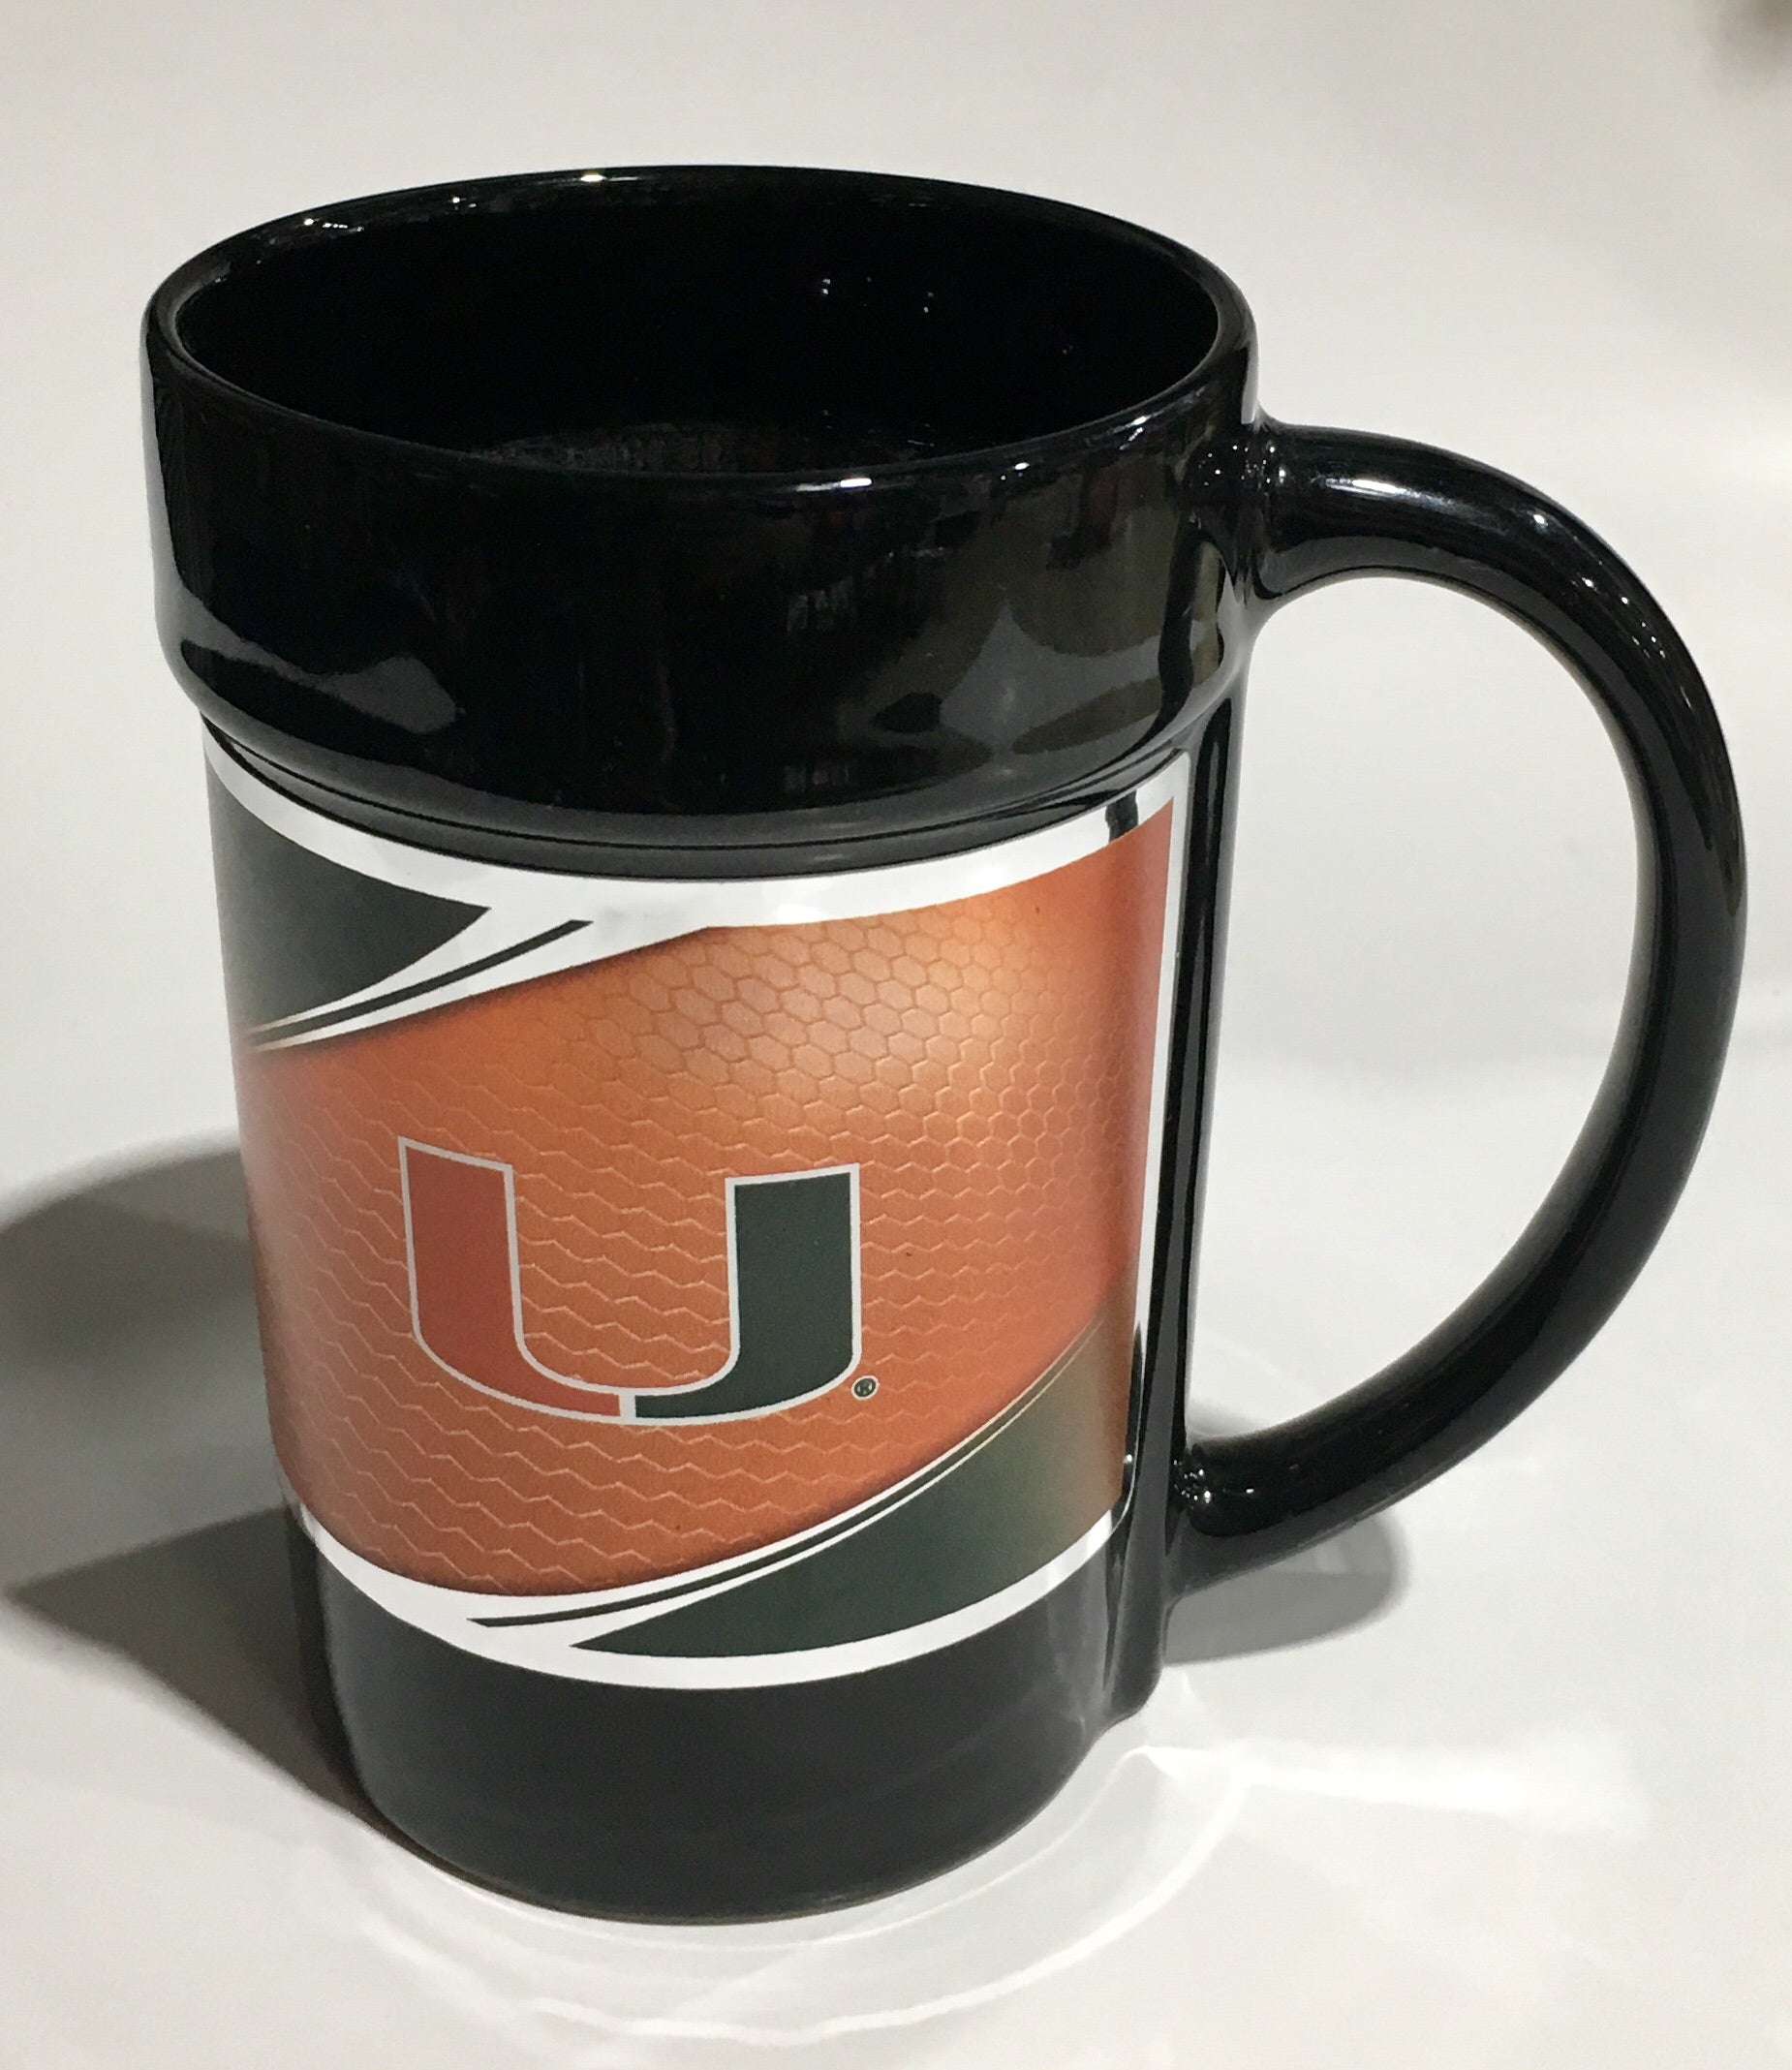 Miami Hurricanes Ceramic Mug w/Metallic Graphics - 15 oz. - Black